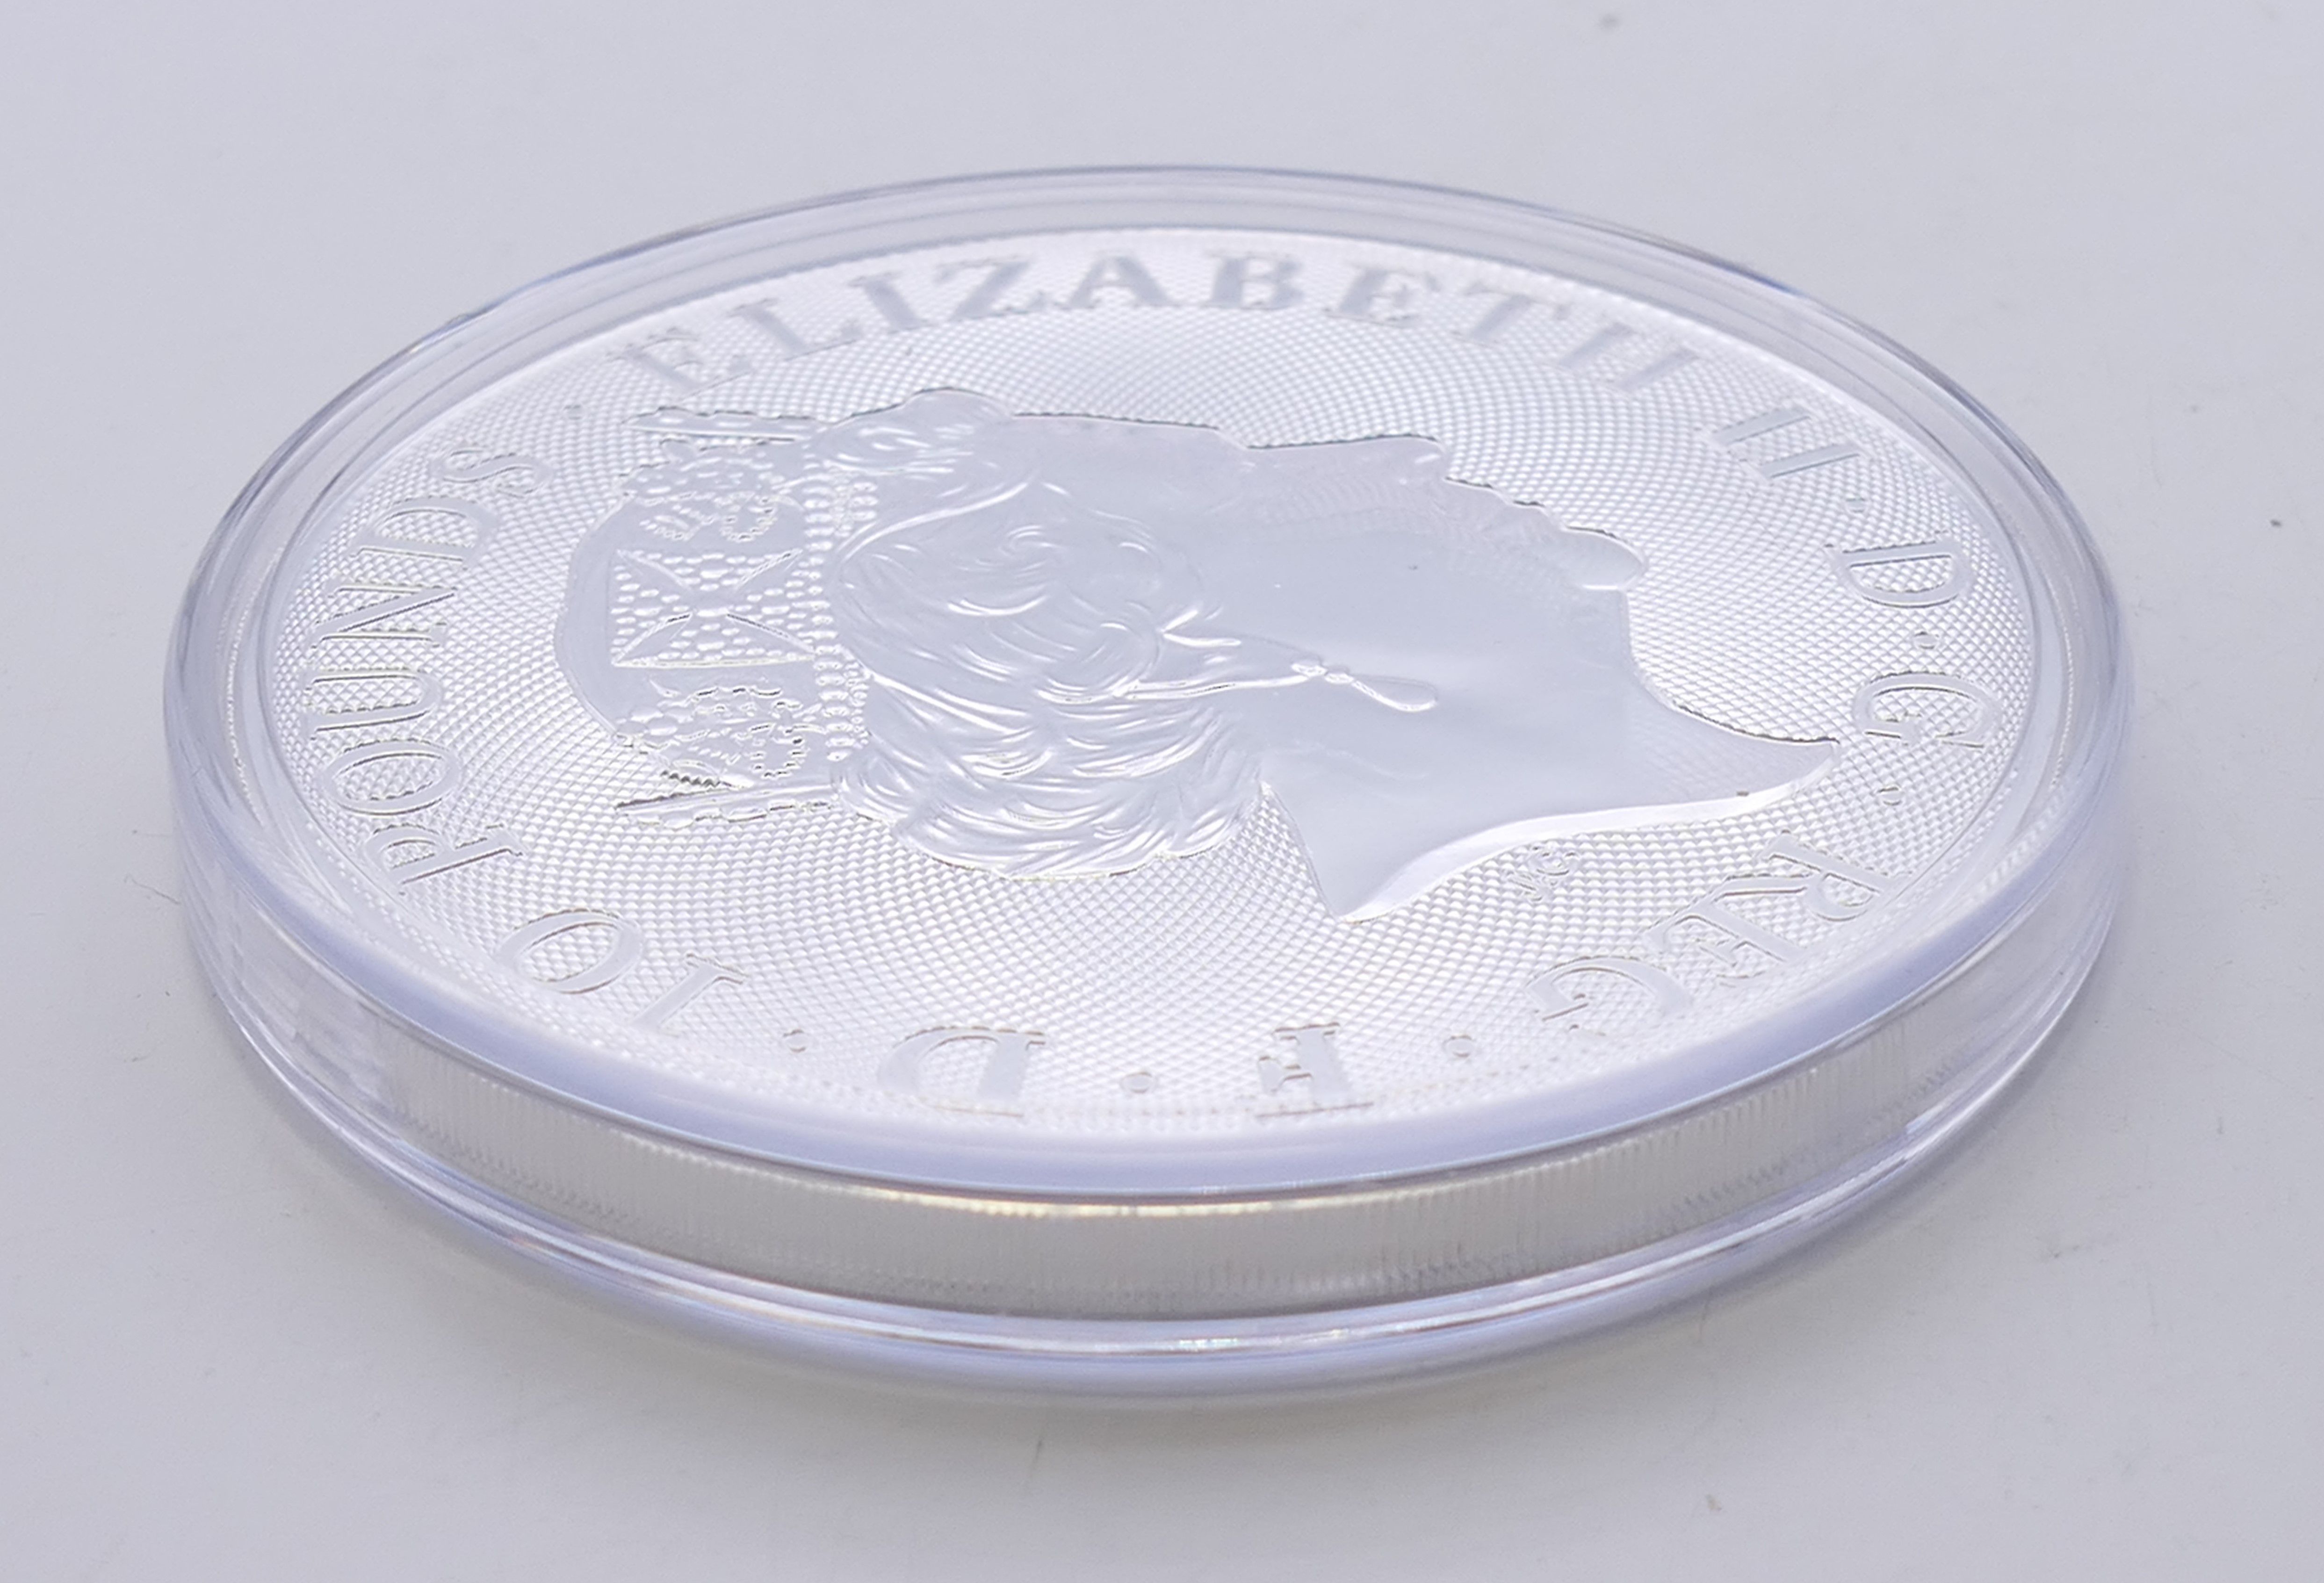 A 2021 10oz fine silver 10 pound coin. - Image 4 of 4